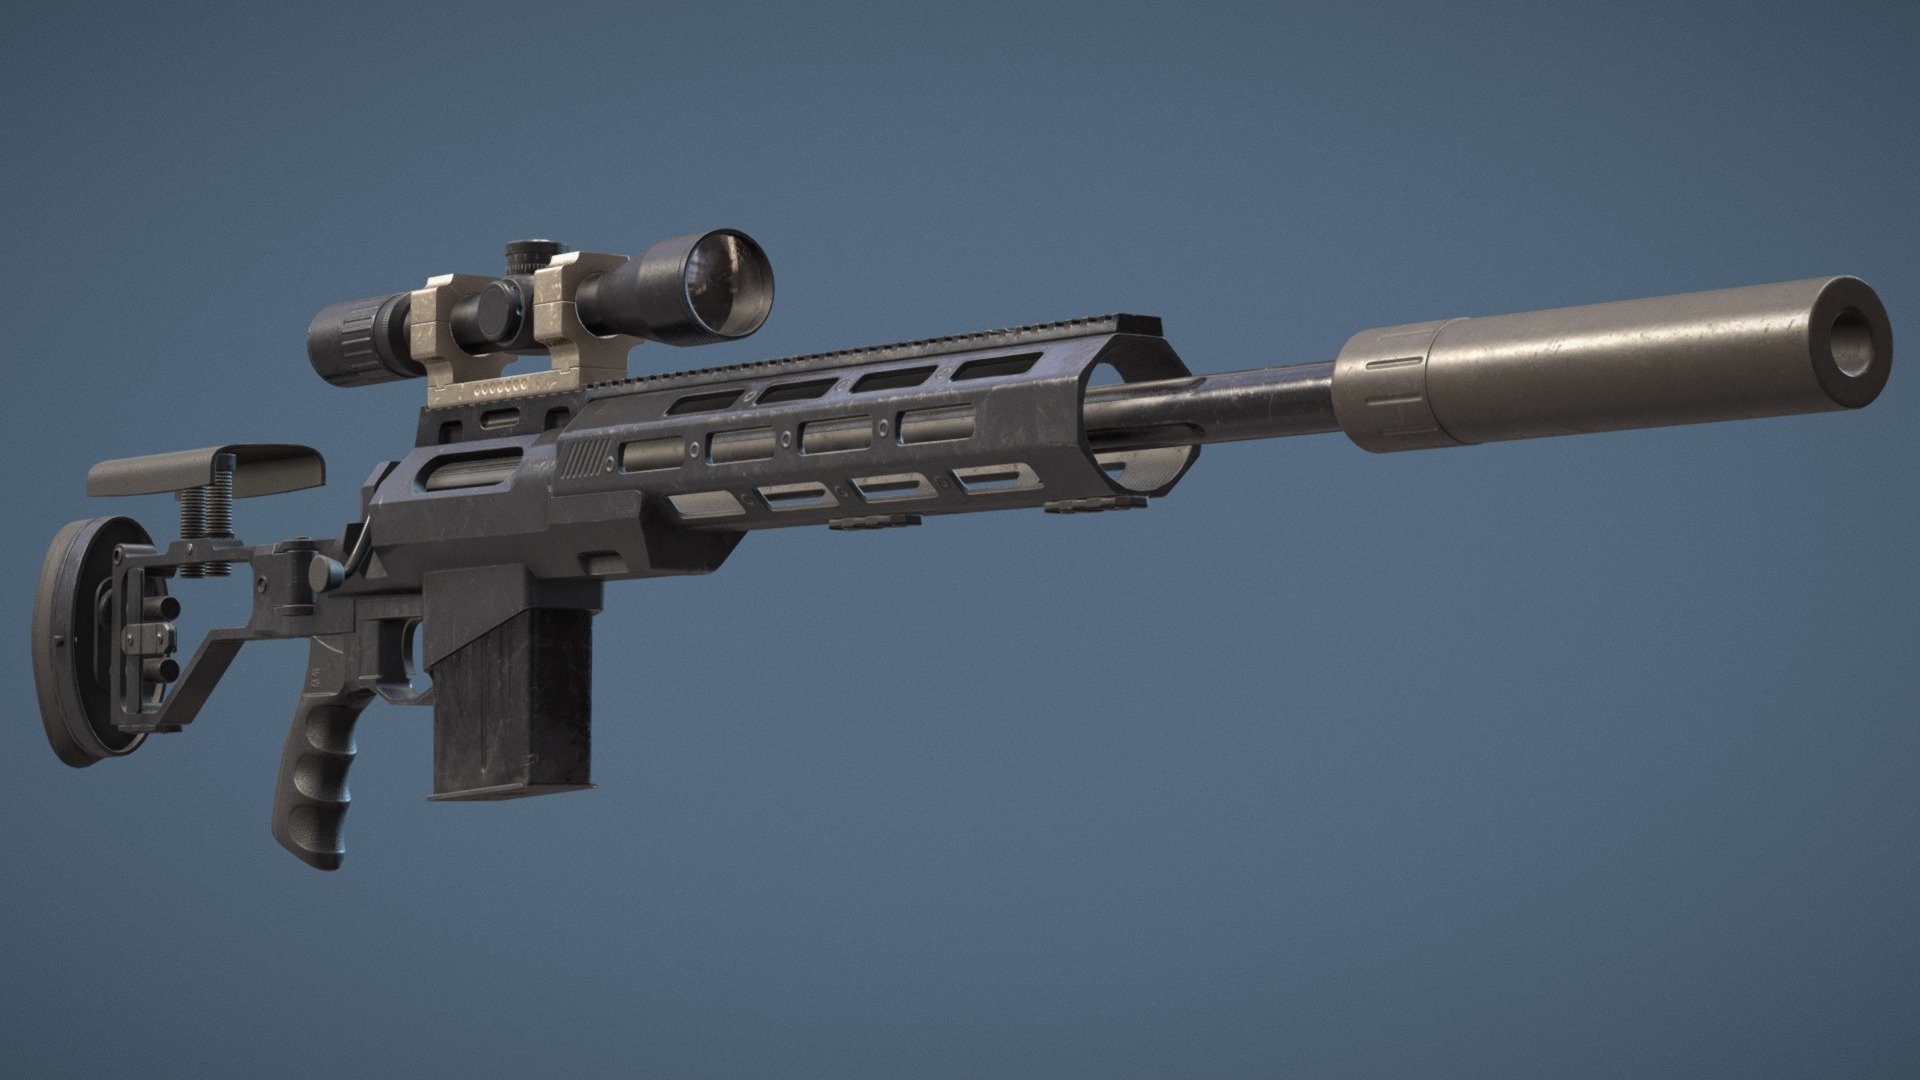 Sniper riffle prop optimized for games 3d model